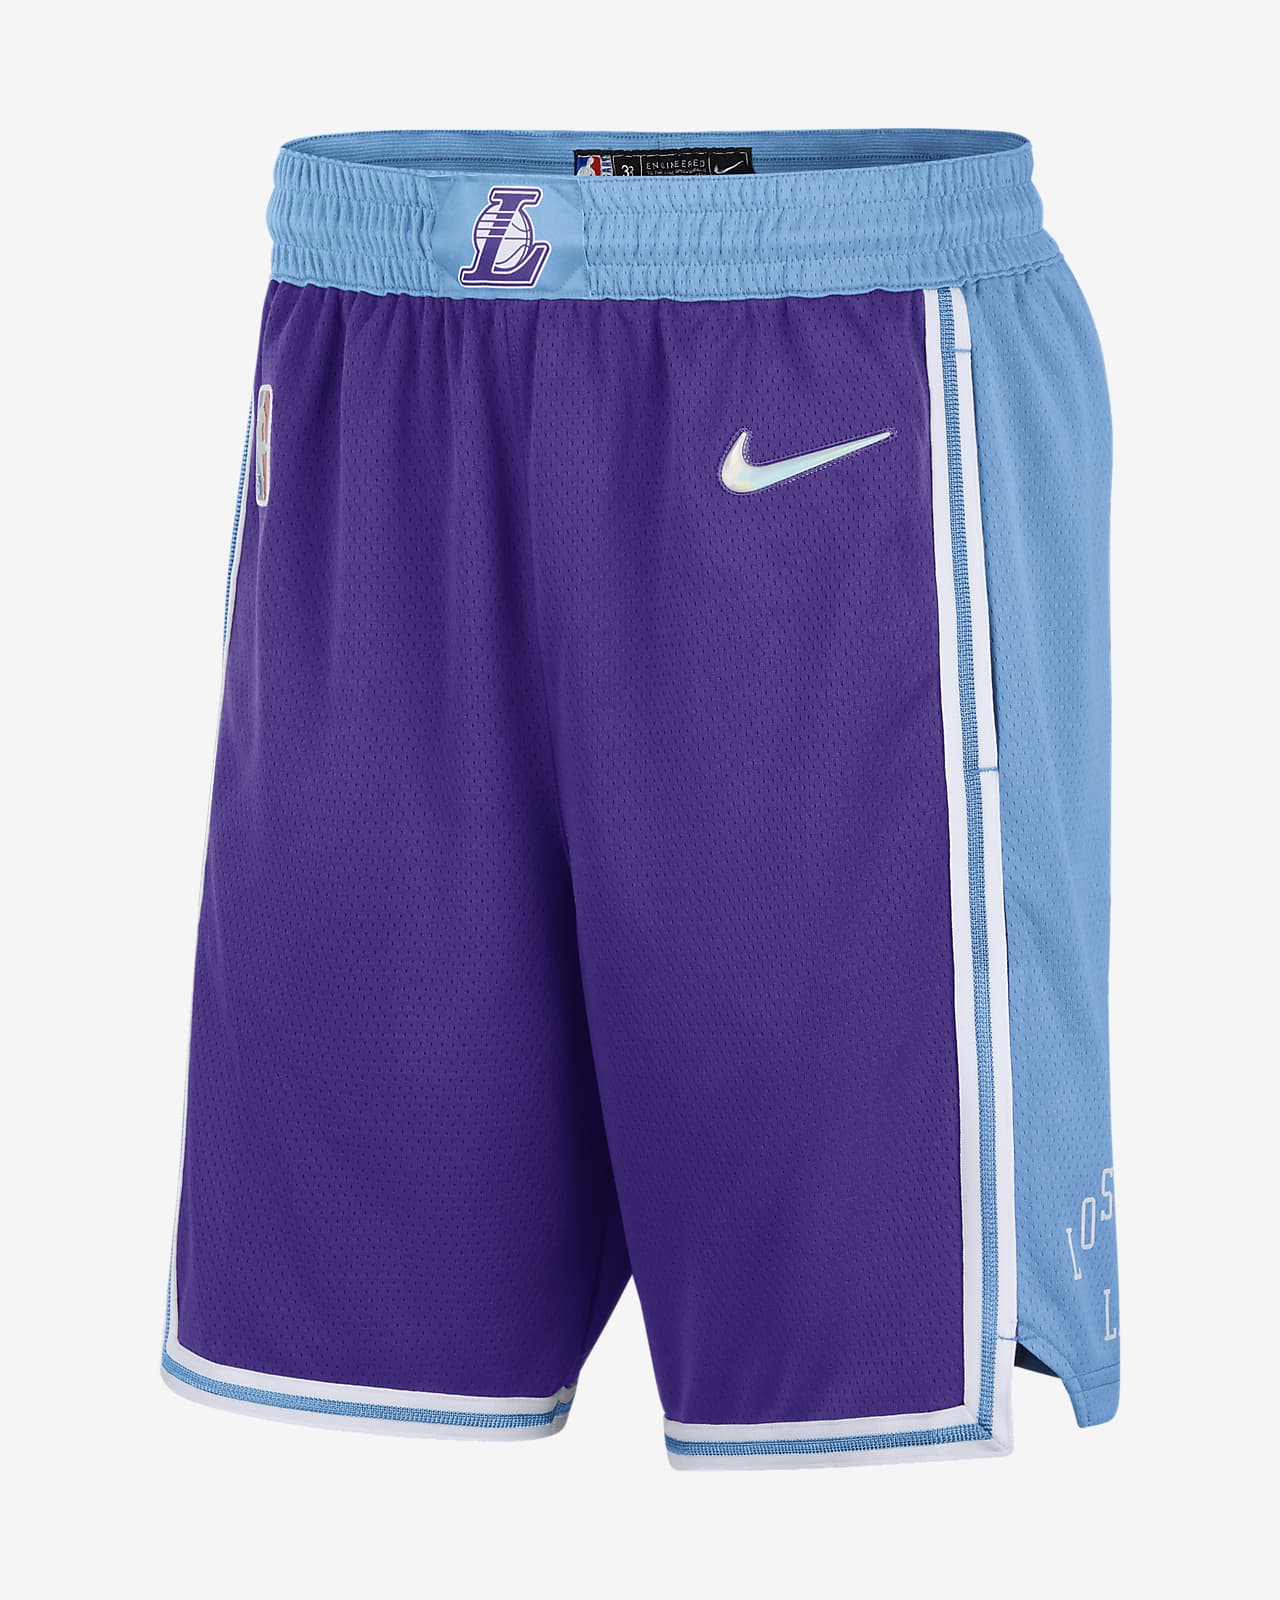 洛杉矶湖人队 City Edition Nike Dri-FIT NBA Swingman 男子短裤